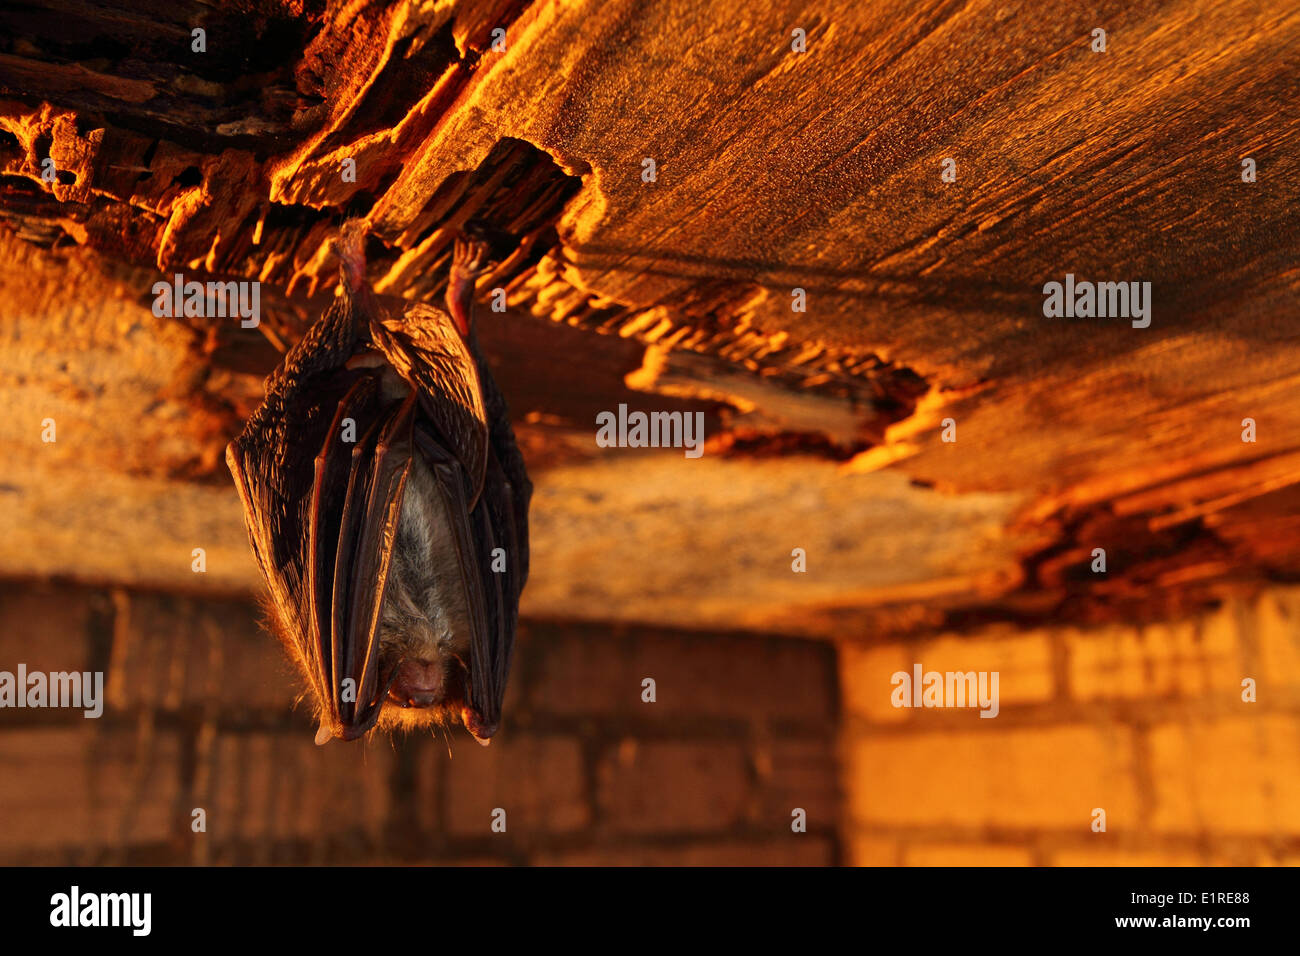 Bat In Hibernation In Basement Stock Photo Alamy